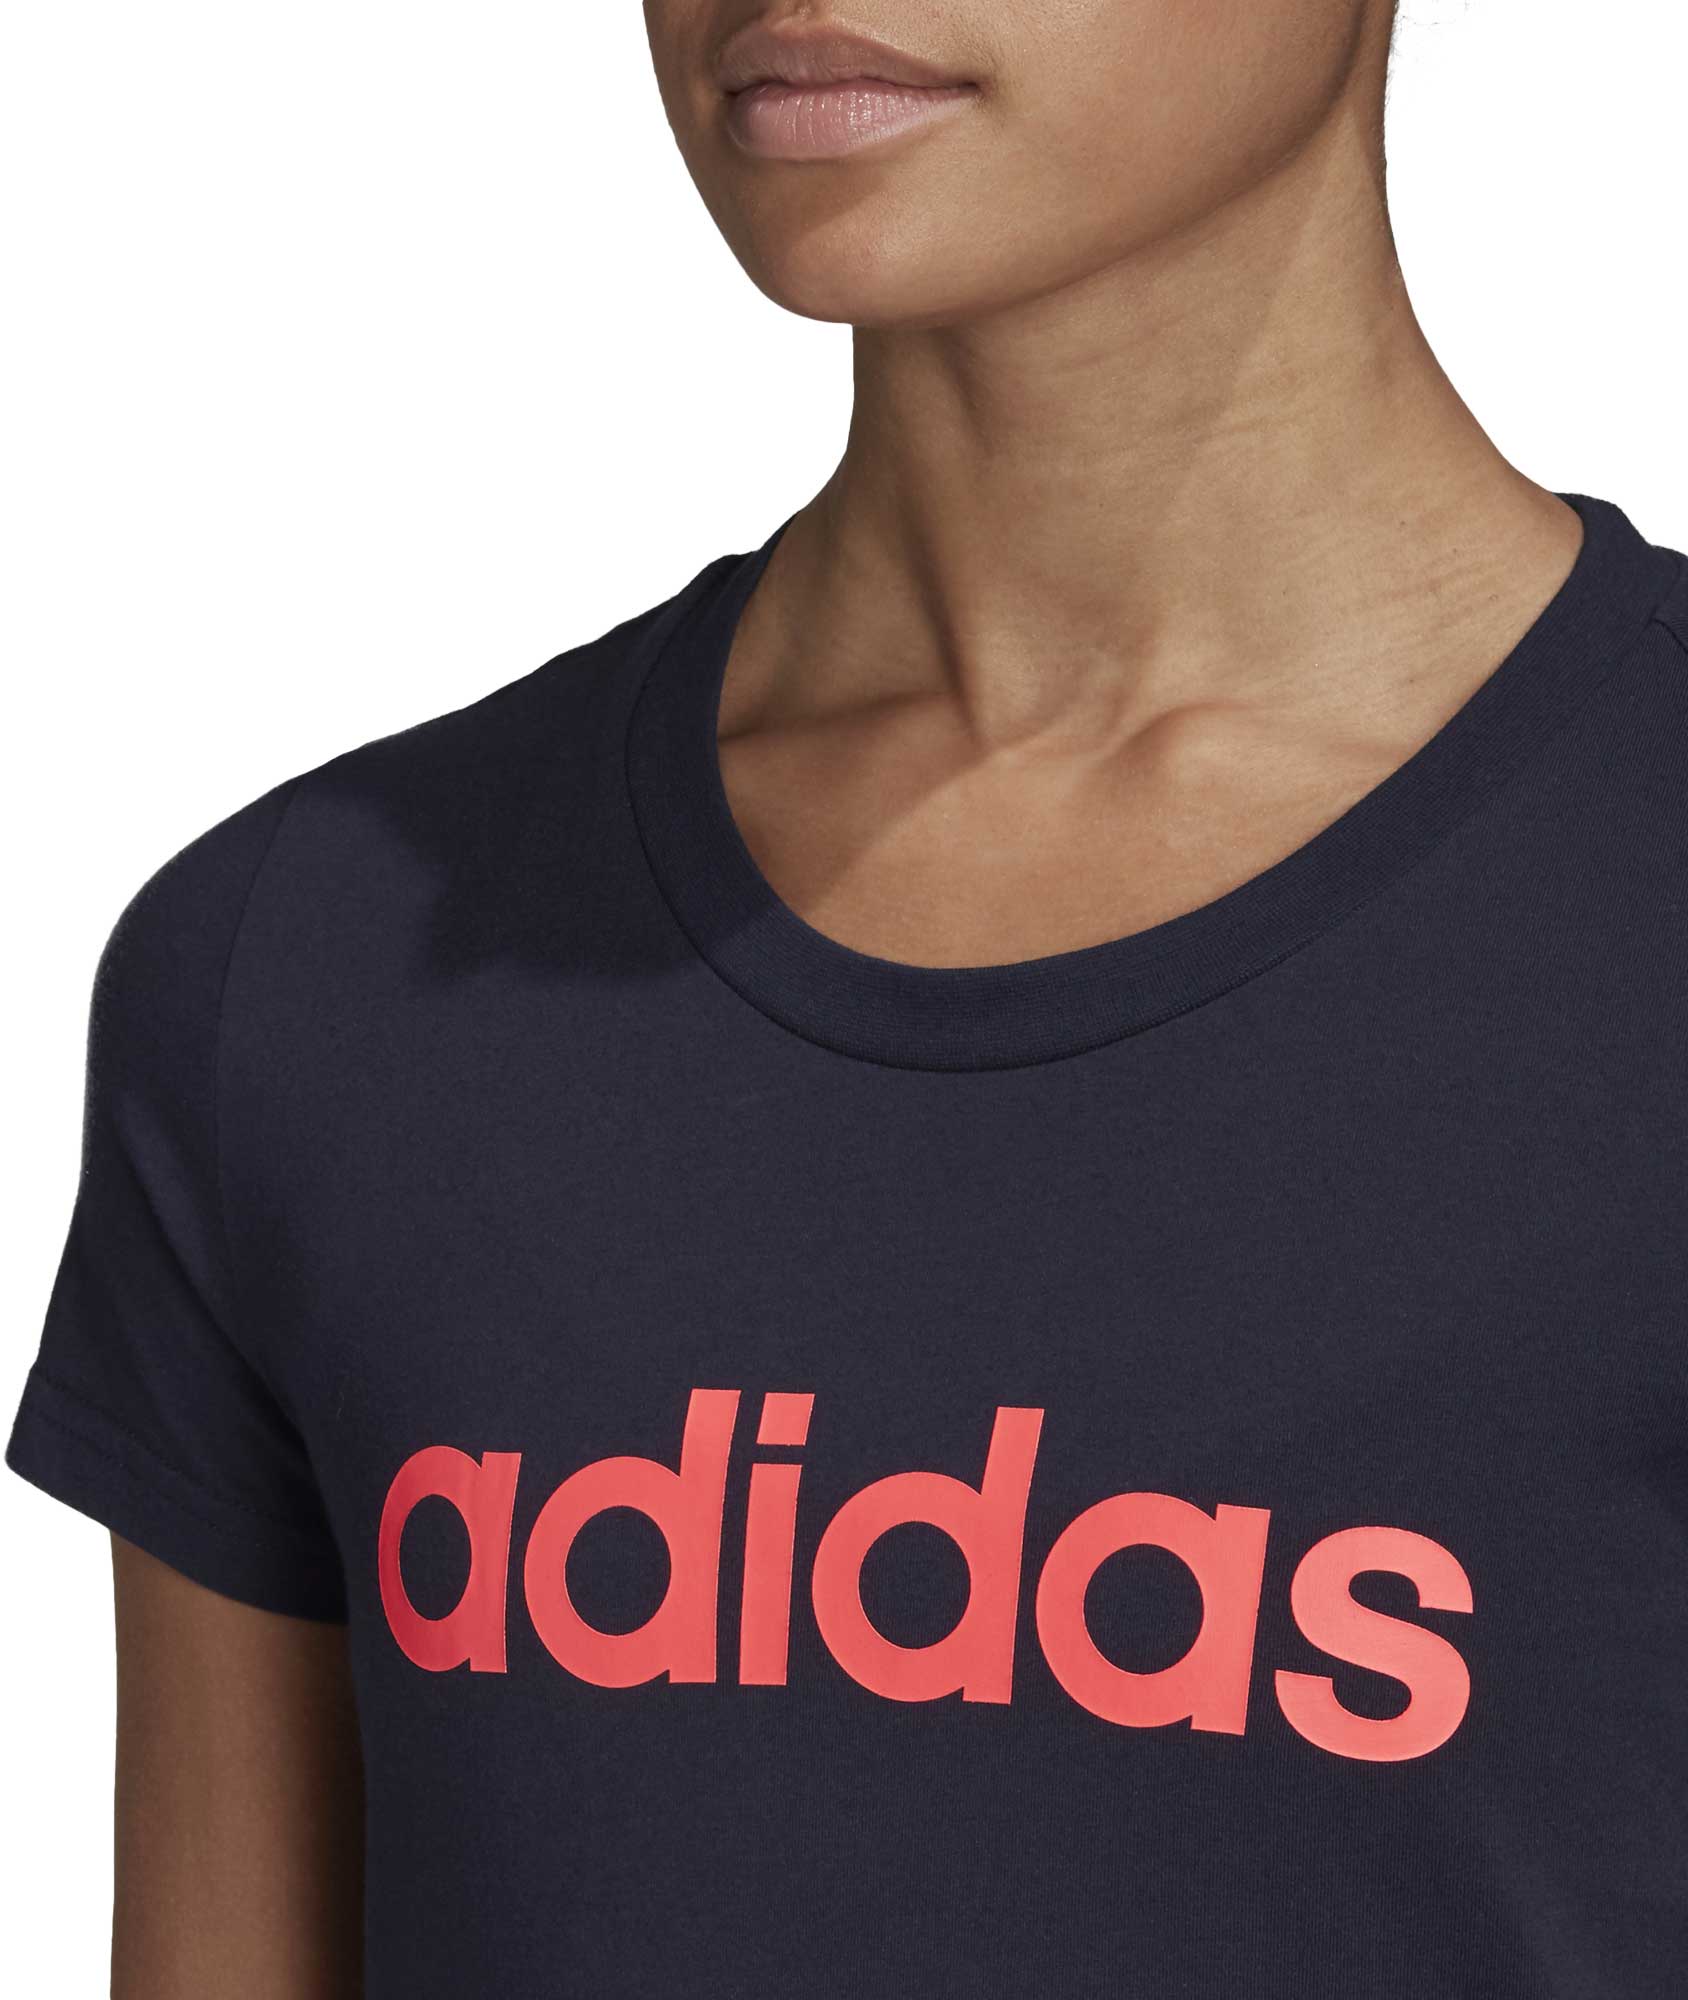 Women's T-shirt